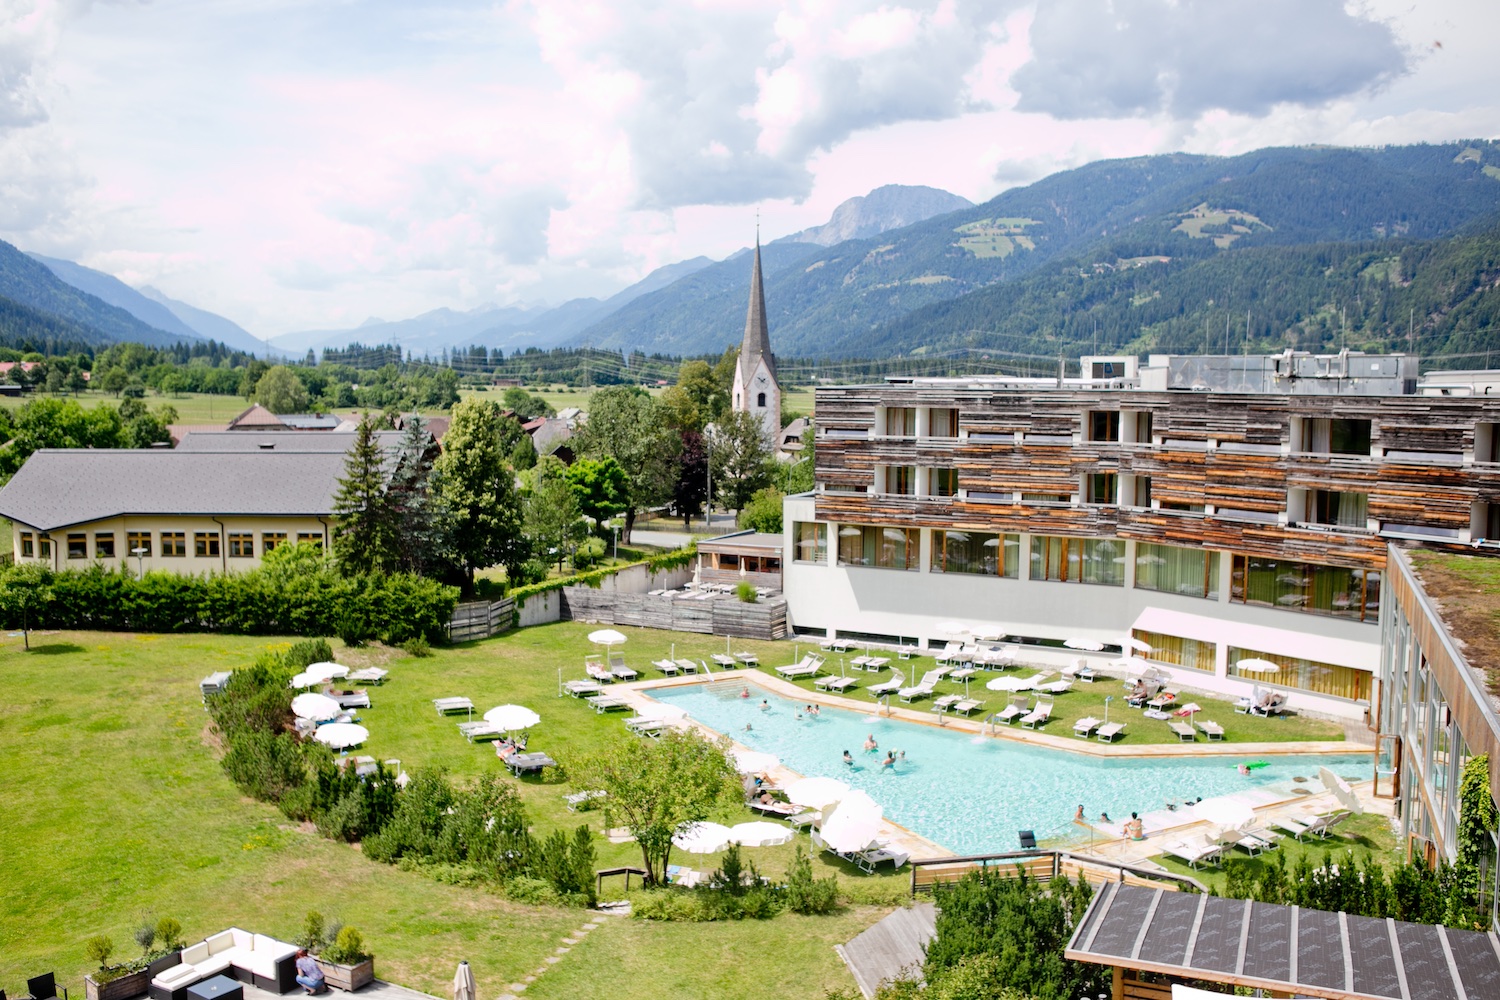 Active-holidays in CARINTHIA with Sportfabrik at FALKENSTEINER HOTEL & SPA CARINZIA, Austria